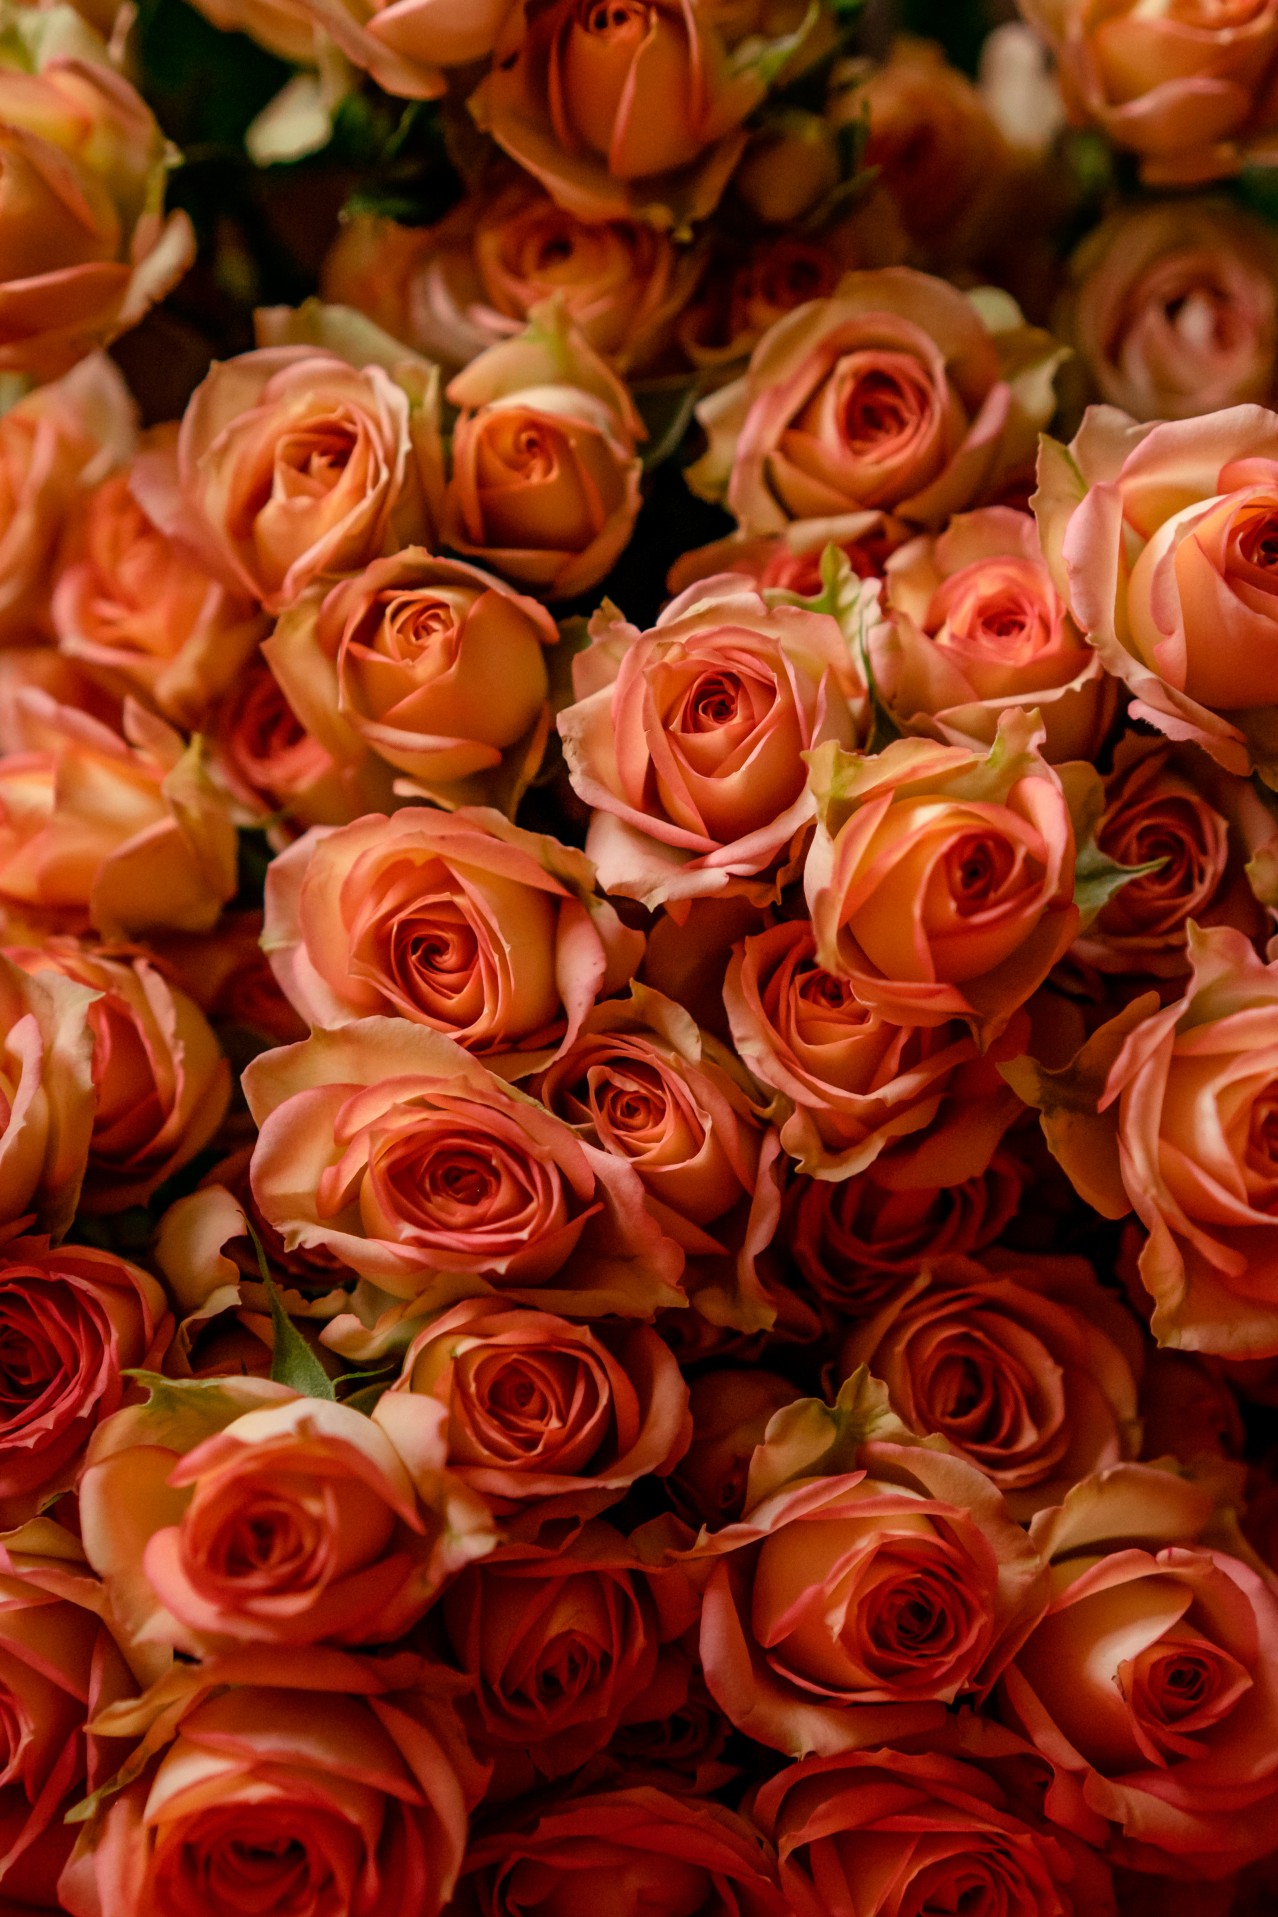 Beautiful roses background